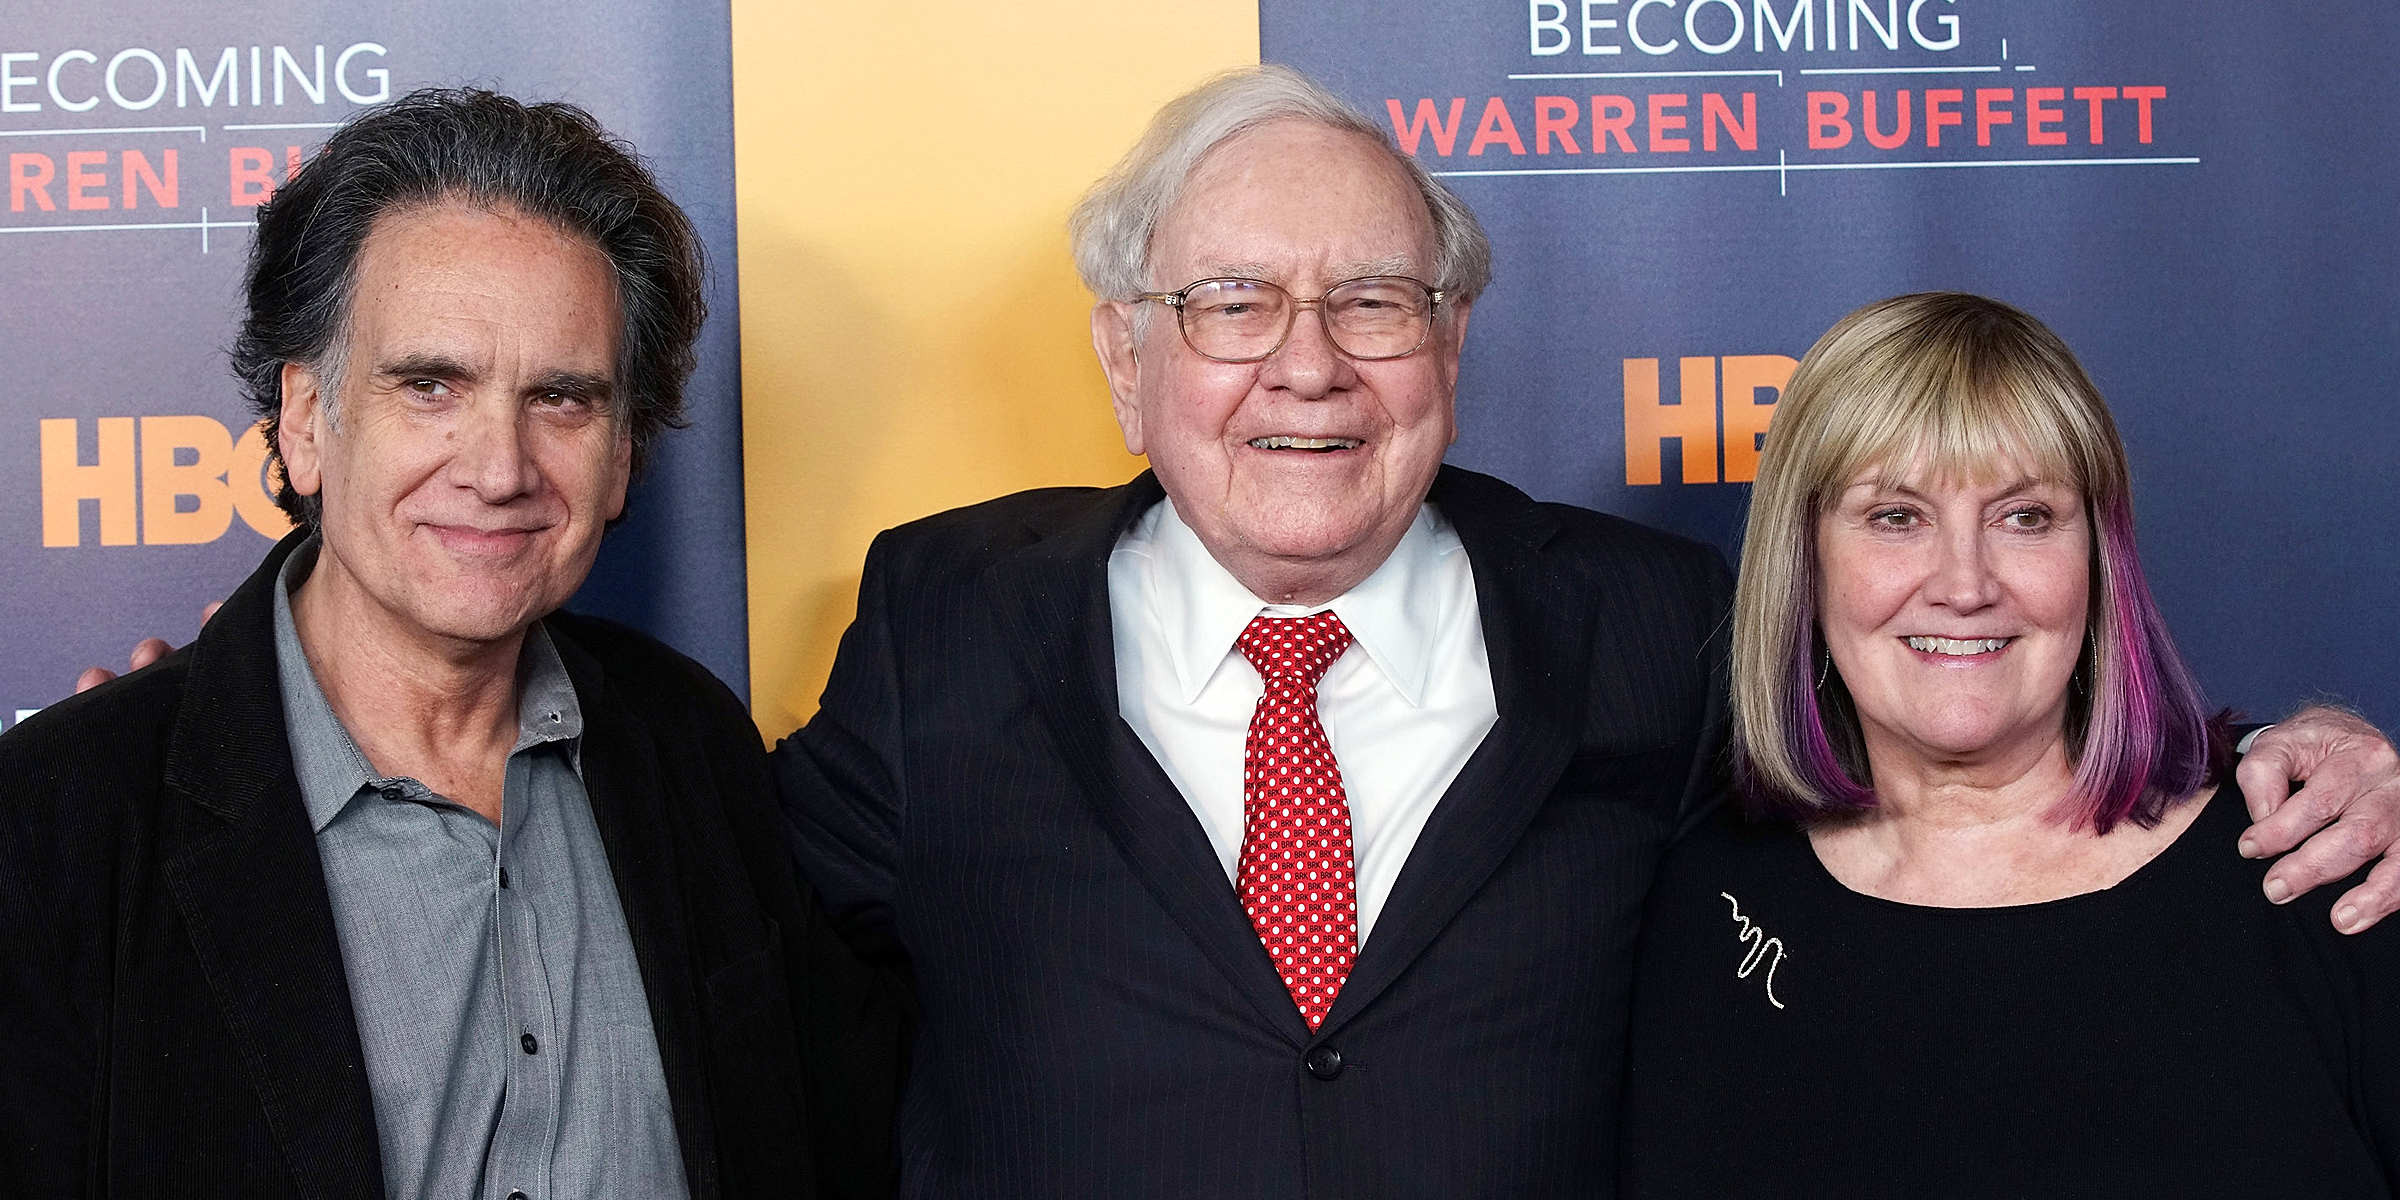 Peter, Warren, and Susie Buffett | Source: Getty Images